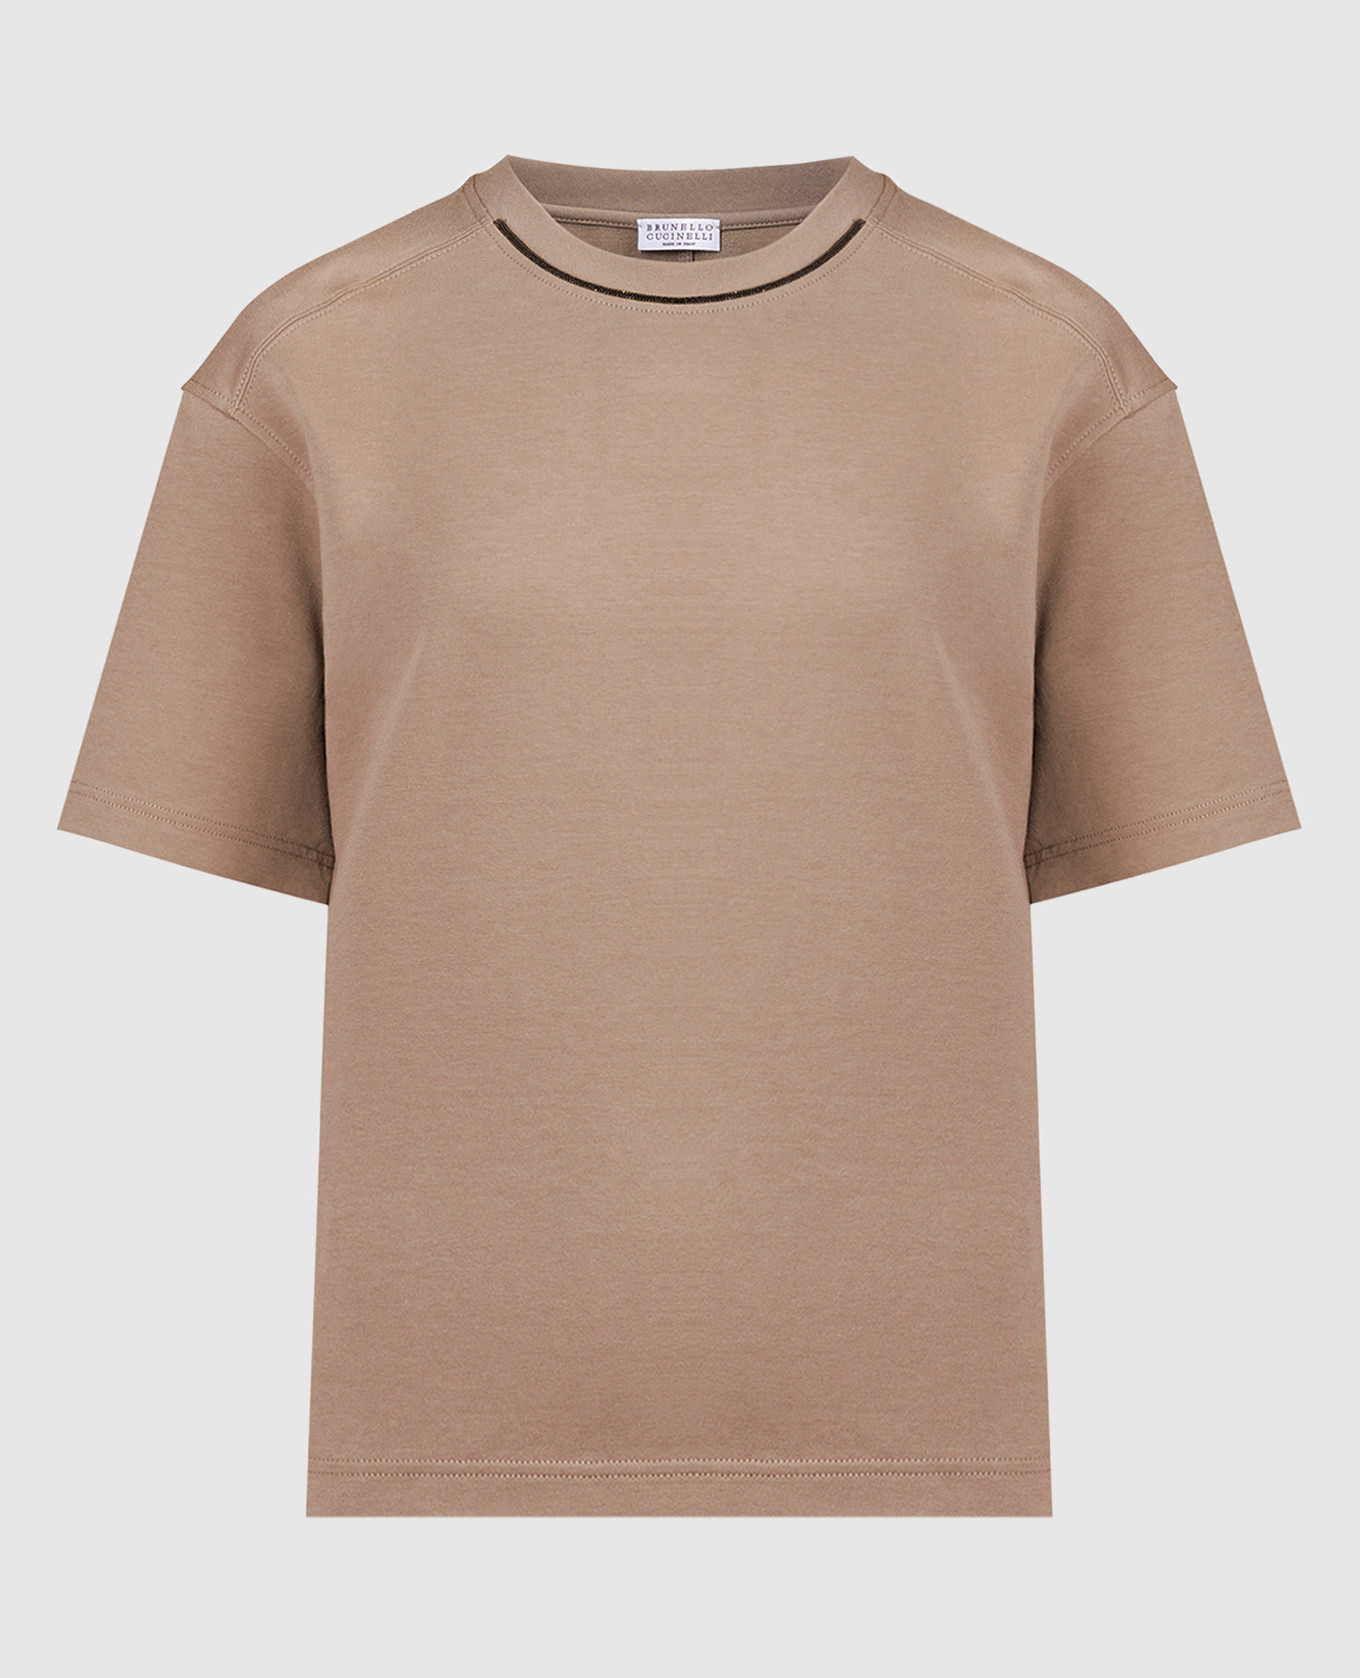 Brown t-shirt with monil chain